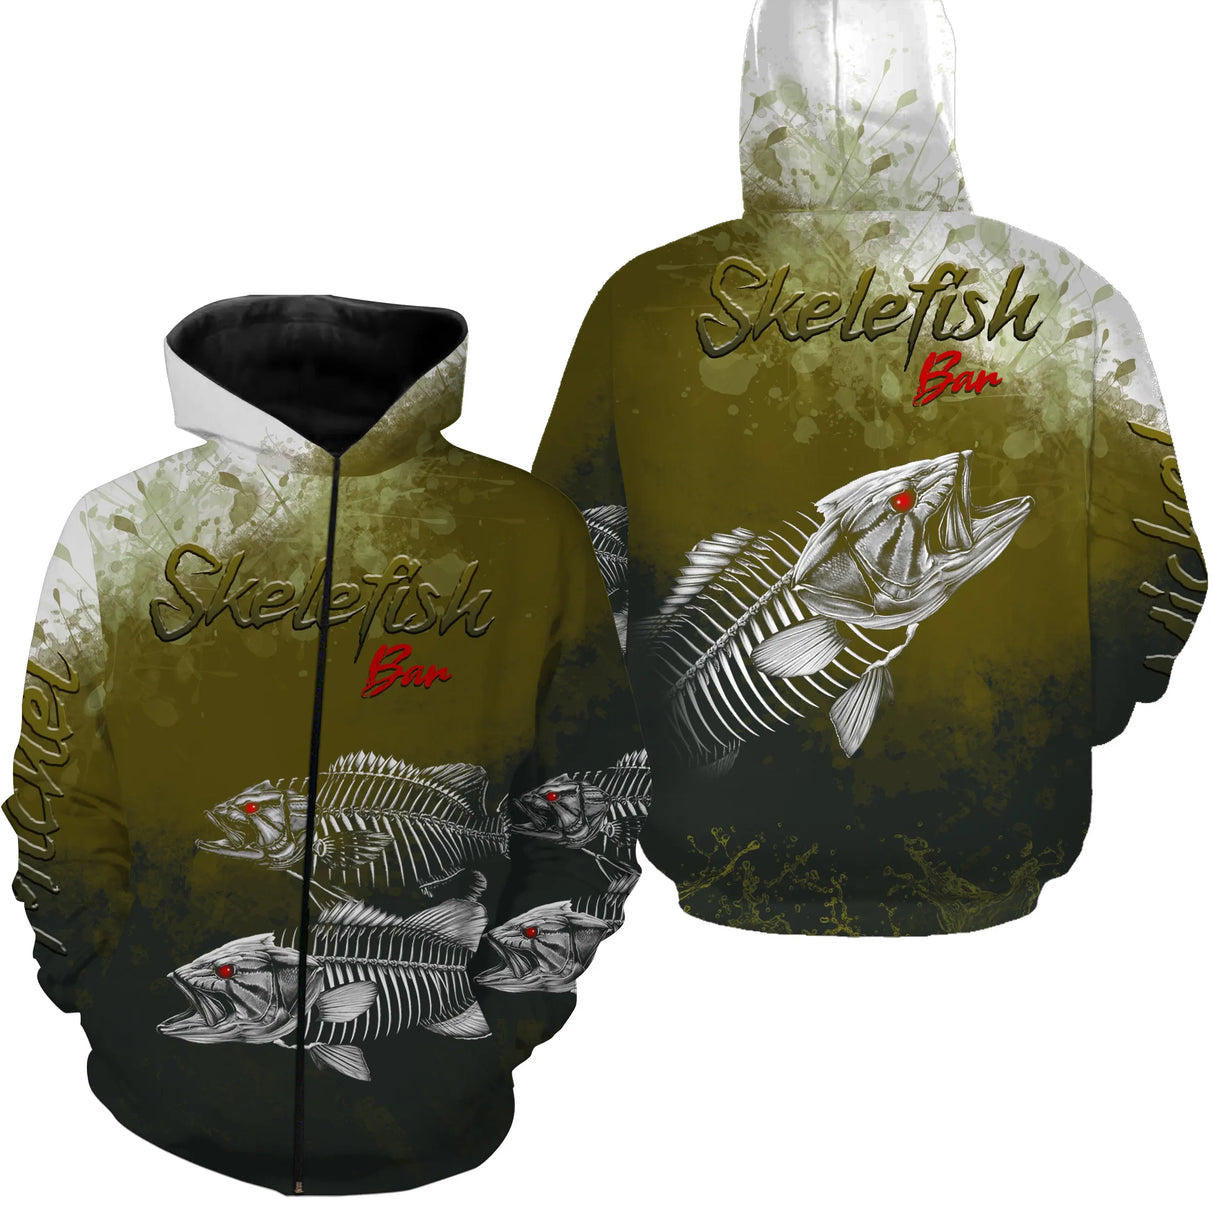 Personalized Anti-UV Fishing T-Shirt, Original Fisherman Gift, Skelefish Bar - CT30072226